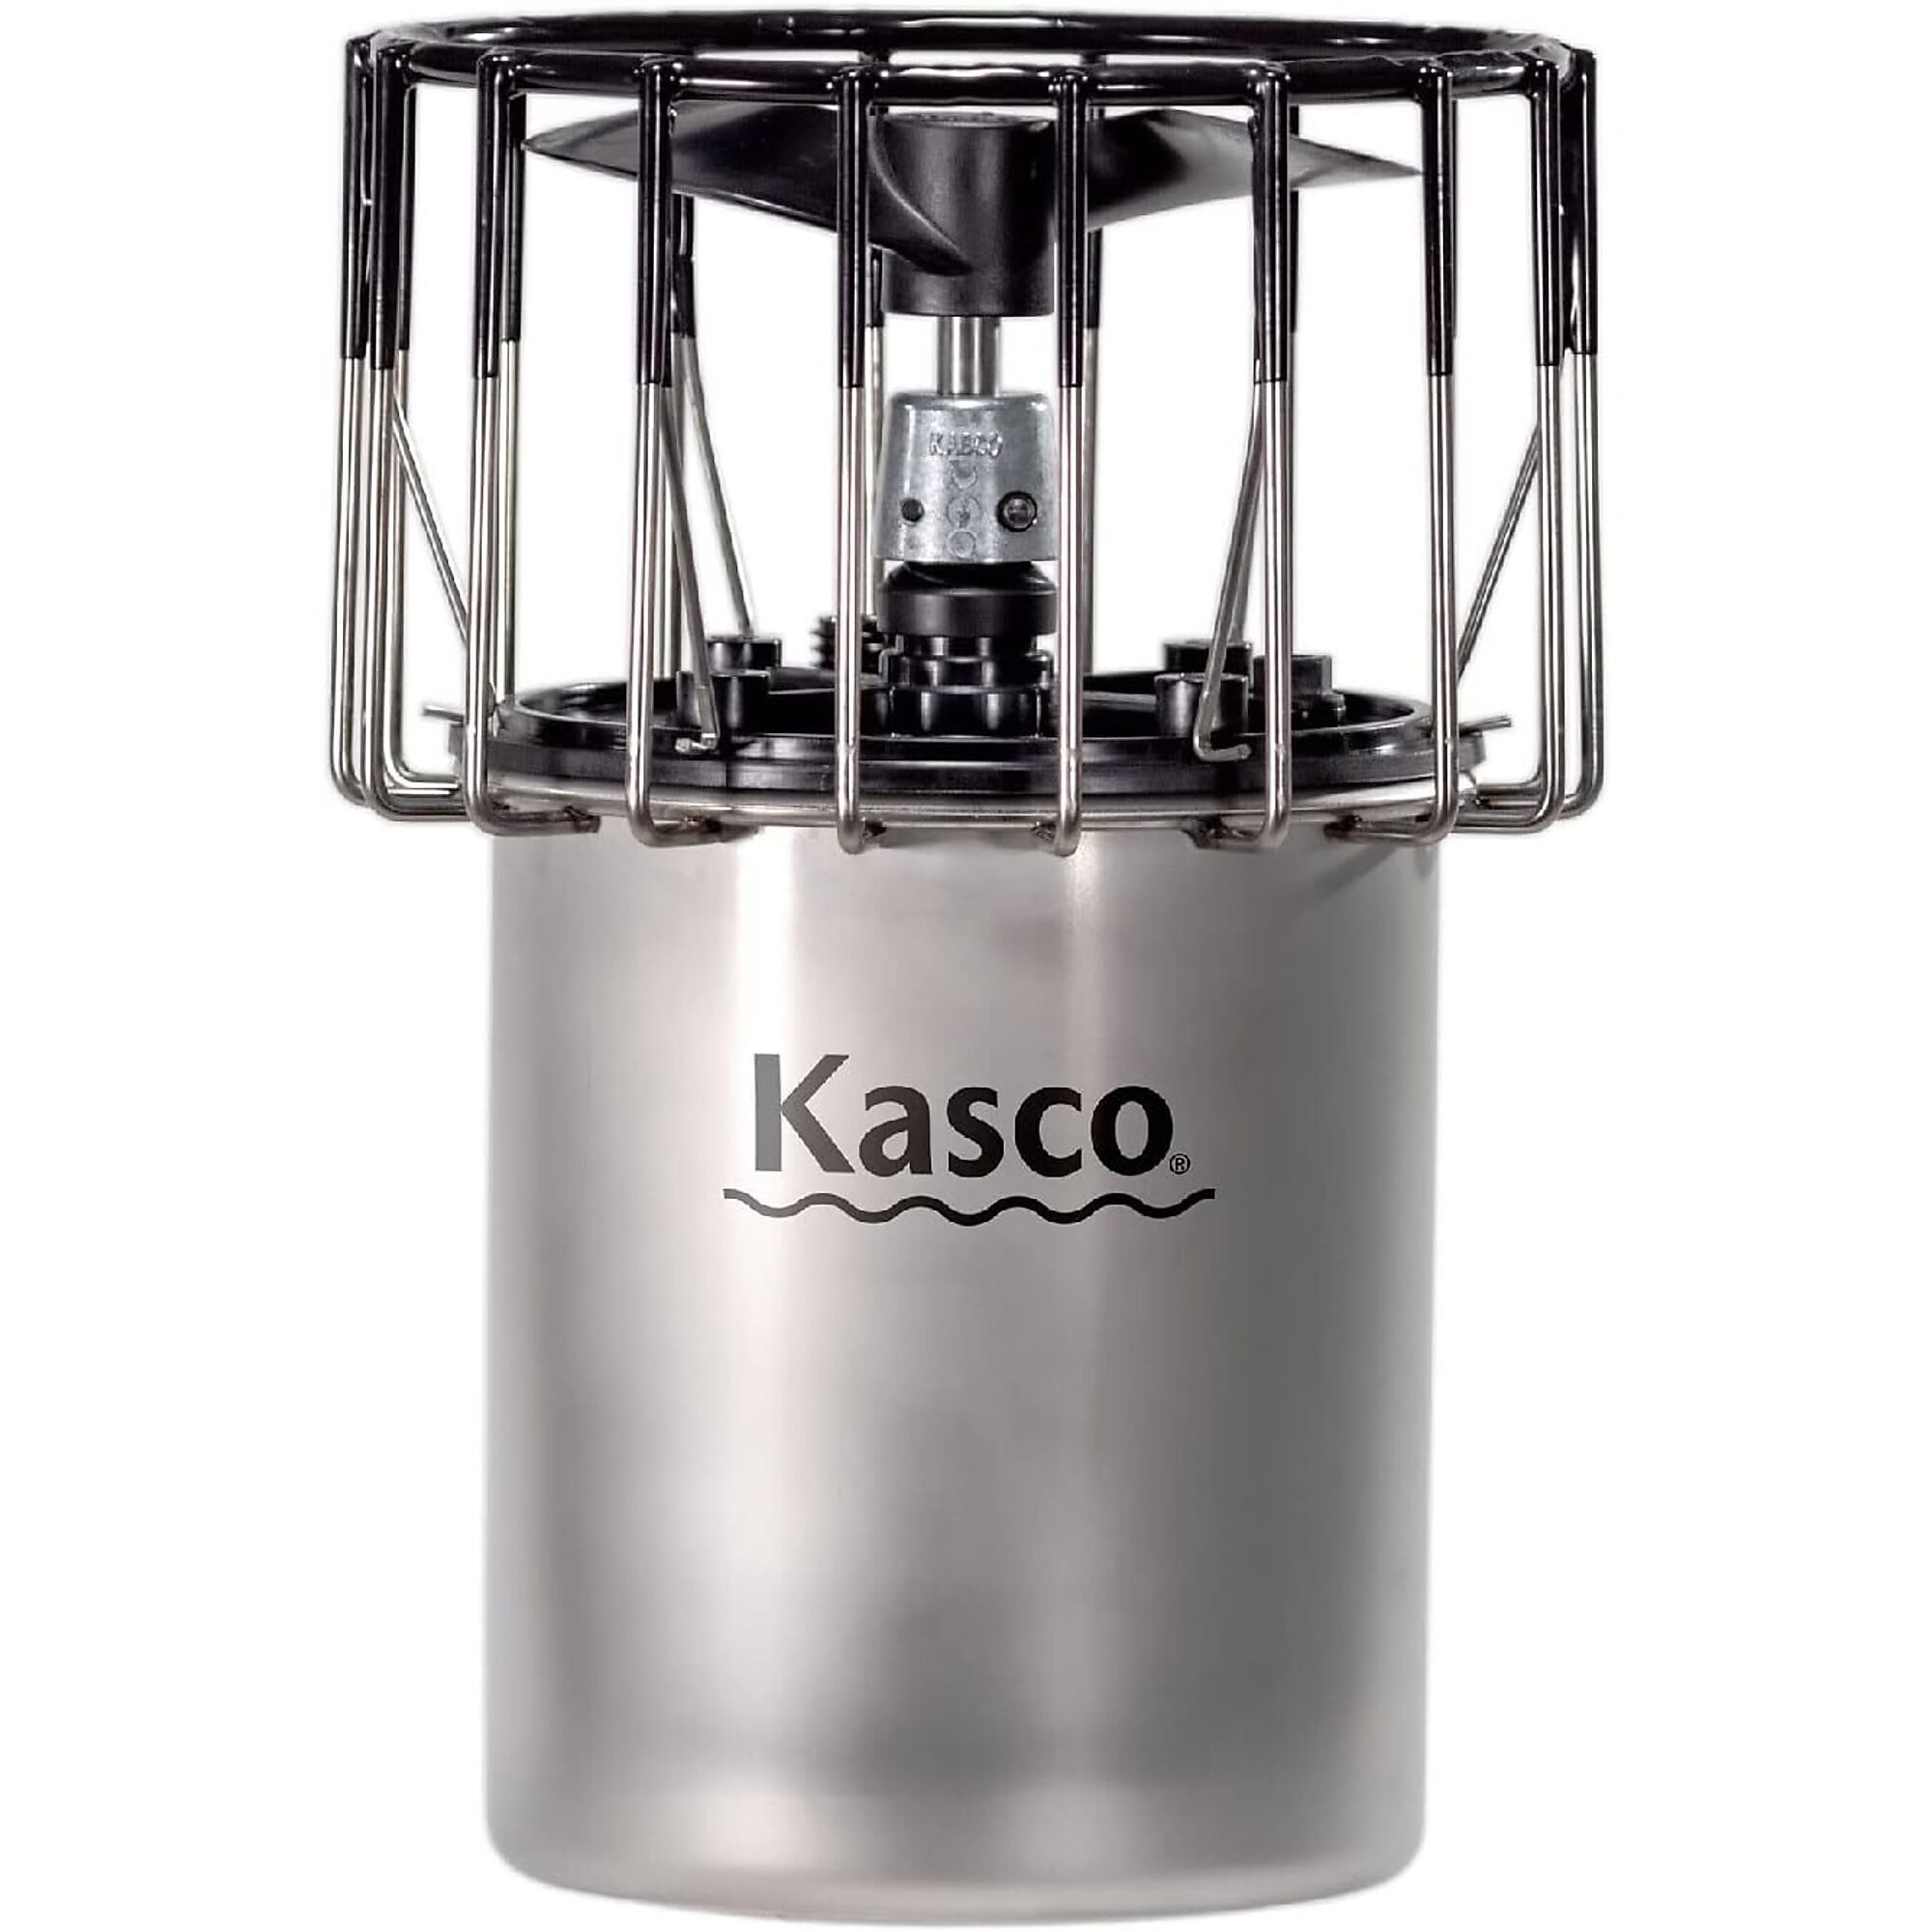 Kasco, De-icer Single for Pond and Lake Bubbler 240V, Volts 240 Power Cord Length 200 ft, Model 3400HD200